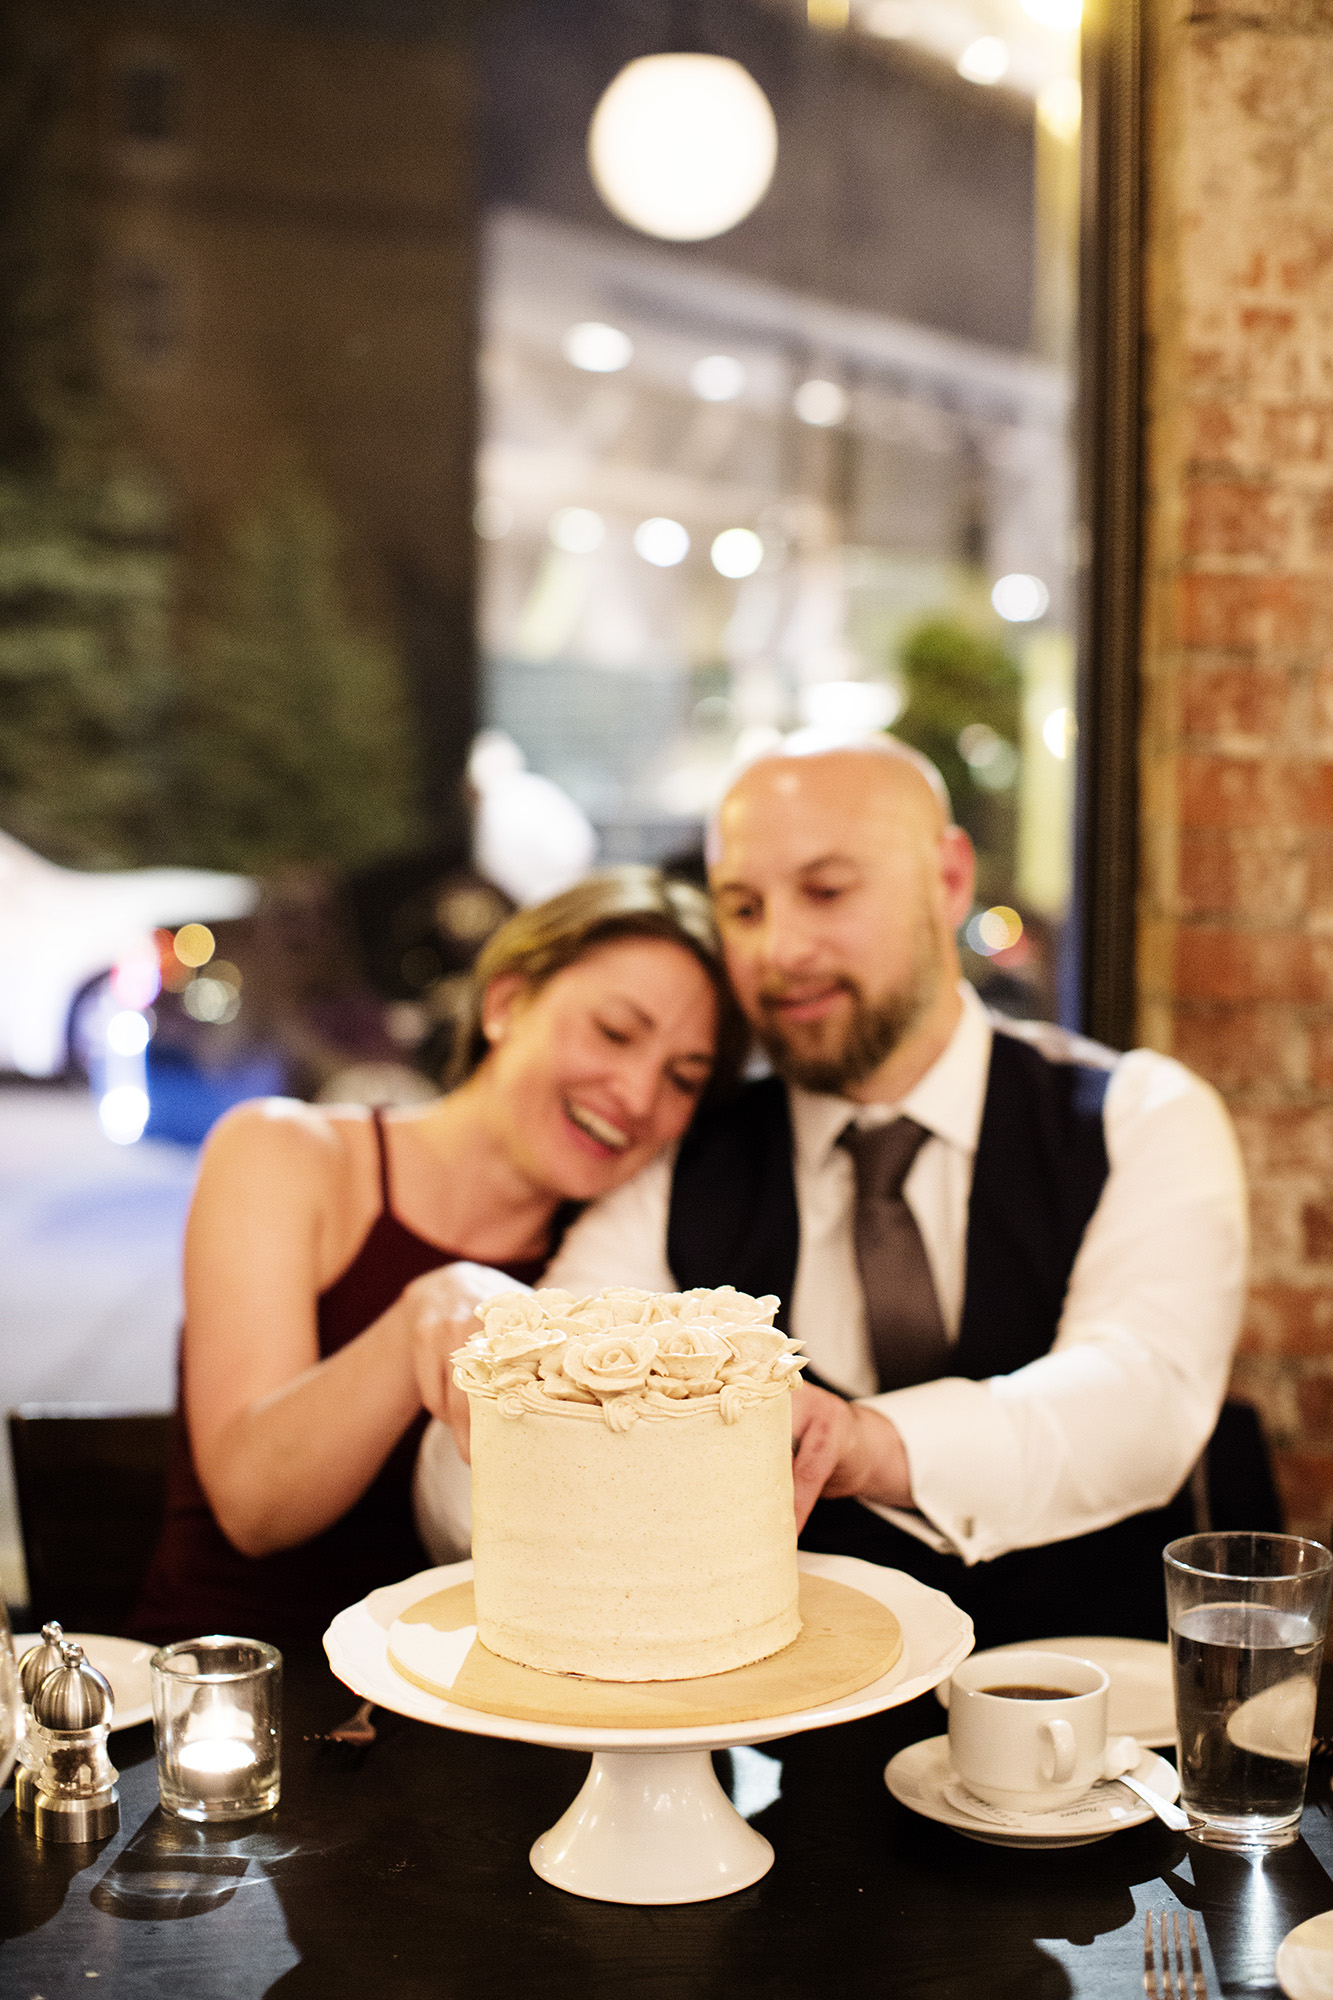 Burch Restaurant Wedding Reception MN | Photography by Photogen Inc. | Eliesa Johnson | Based in Minneapolis, Minnesota